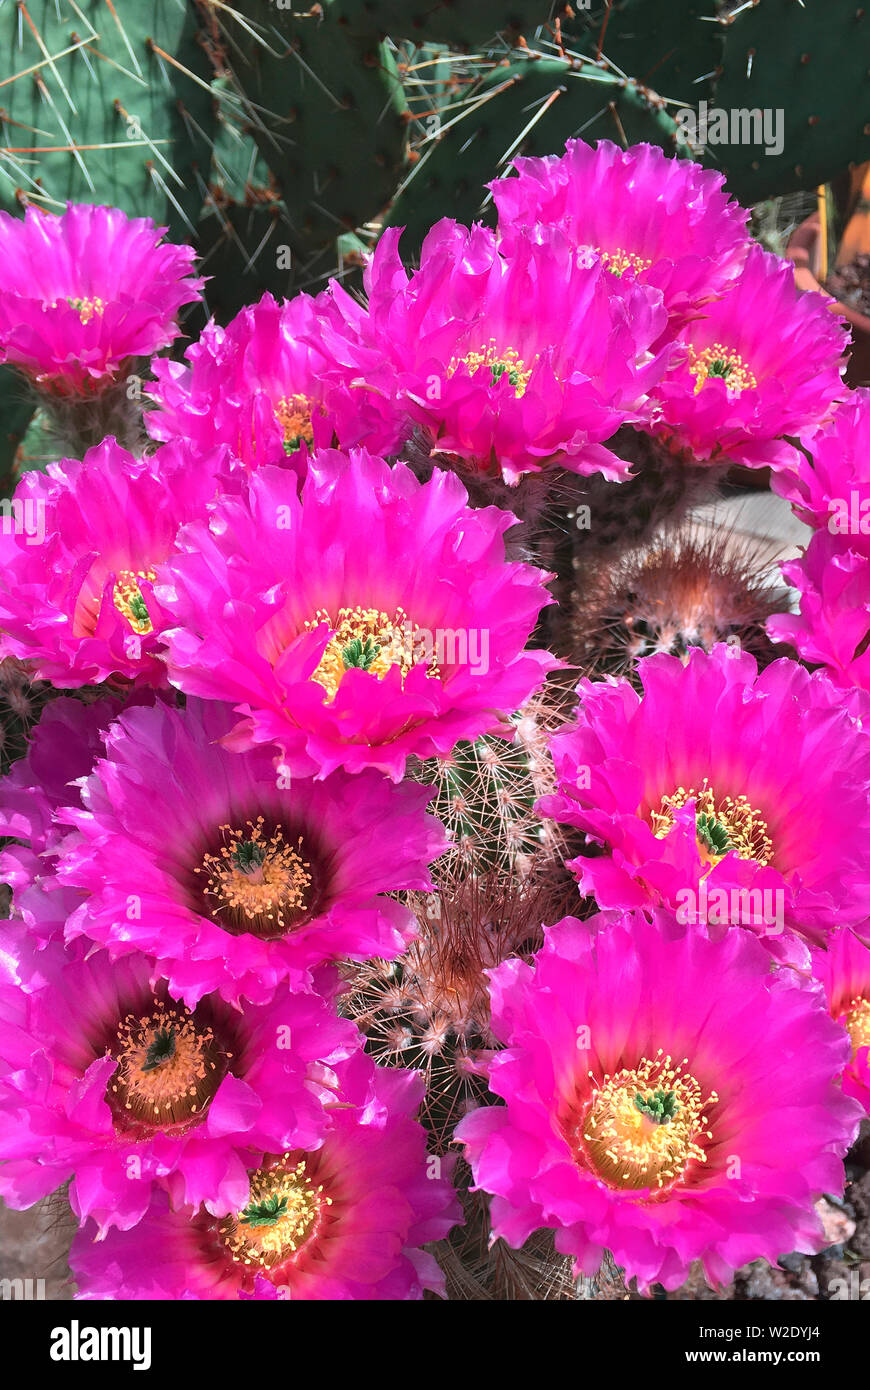 Flowering cactus Echinocereus reichenbachii from Texas - USA. Stock Photo